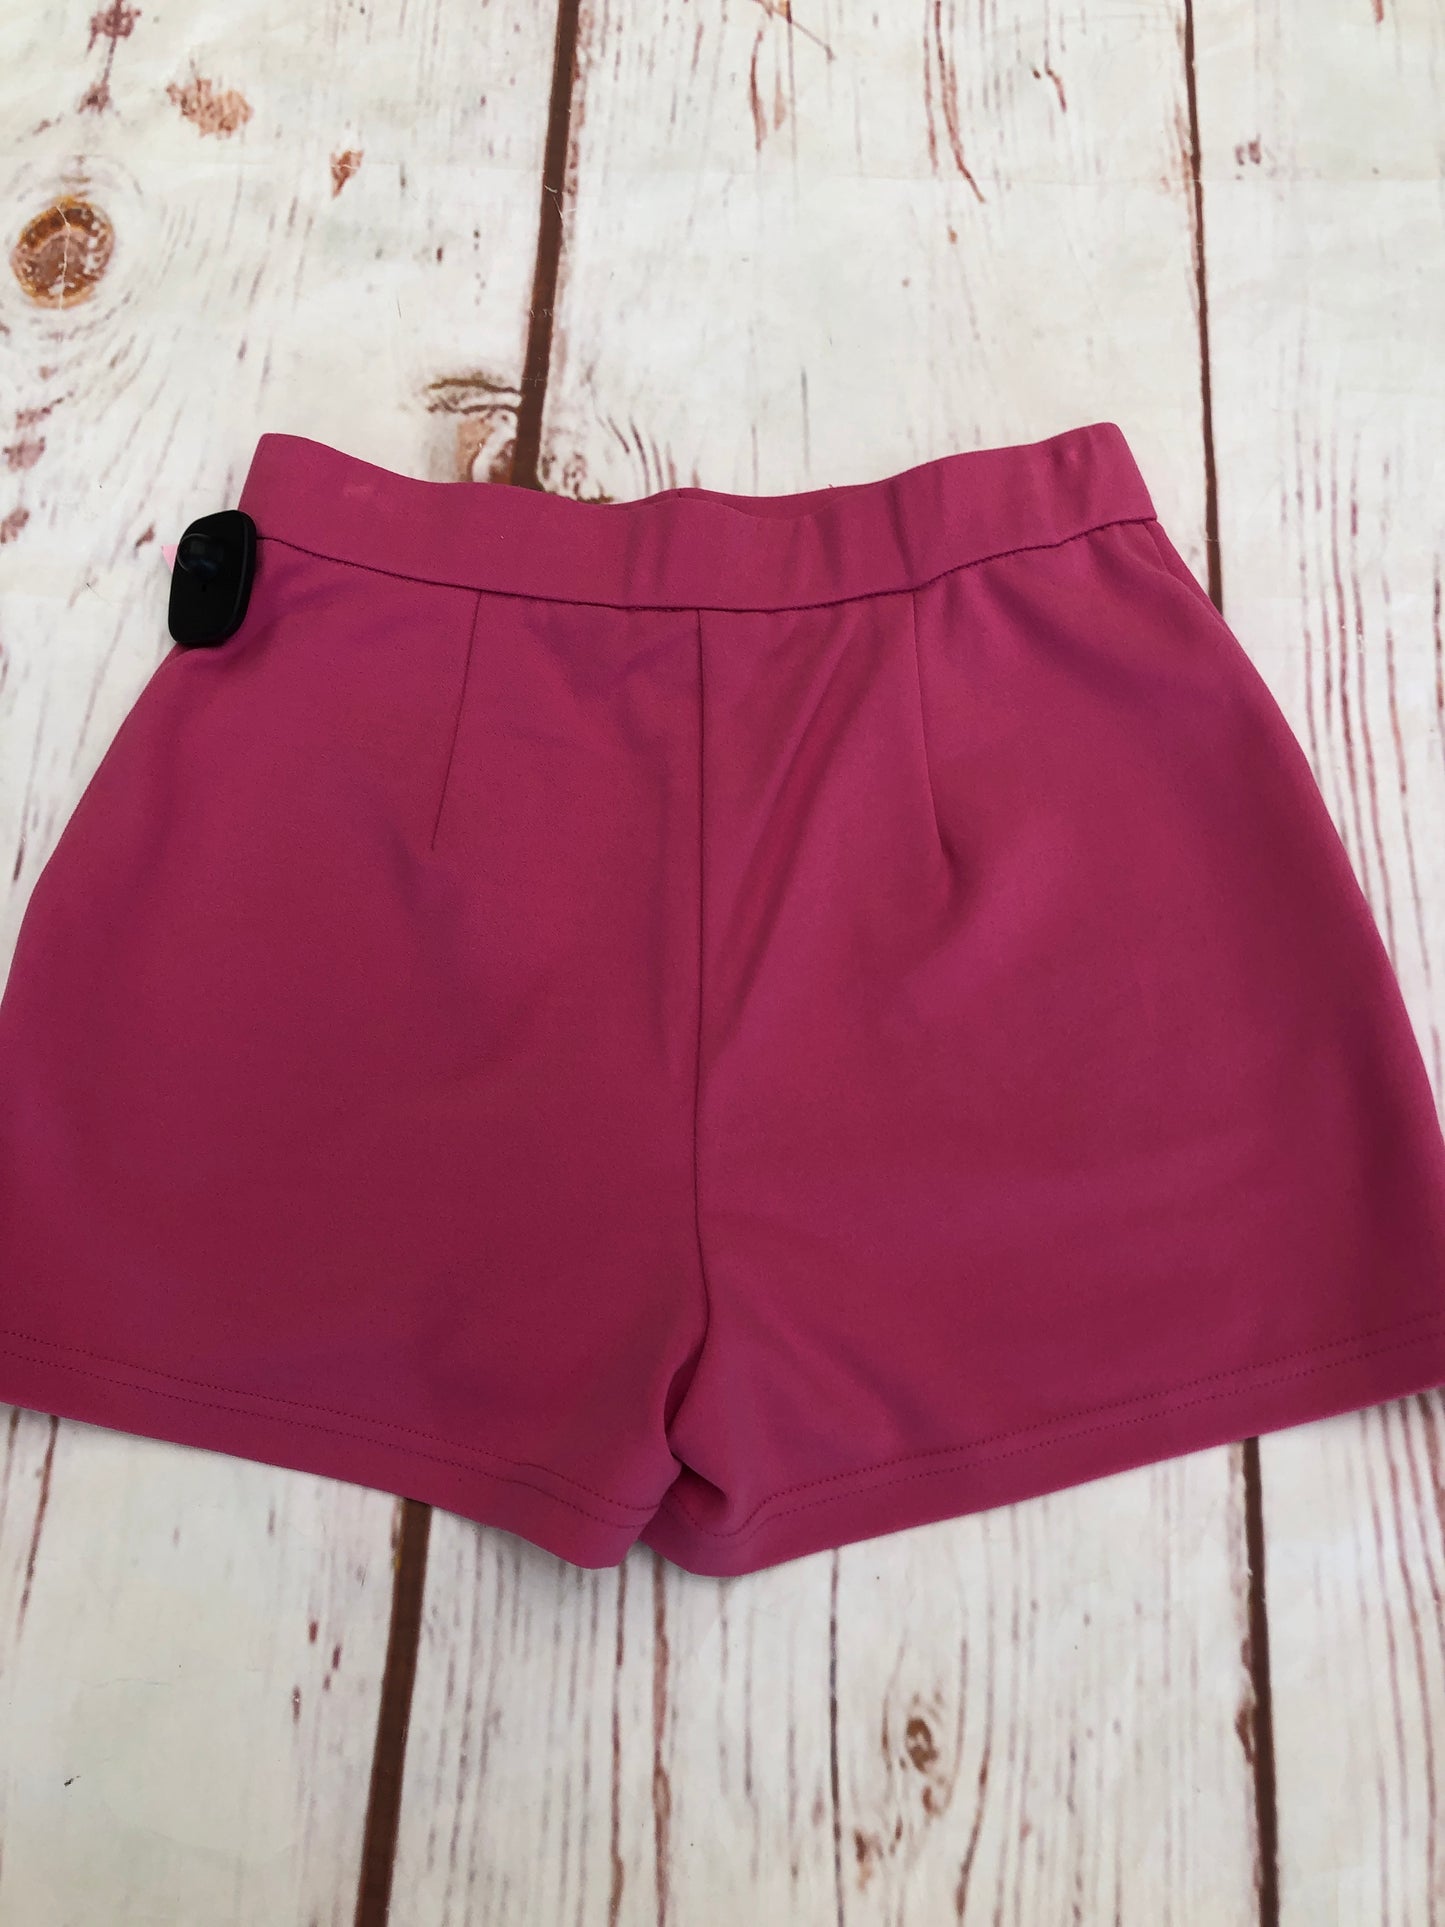 Shorts By Versona  Size: Xs